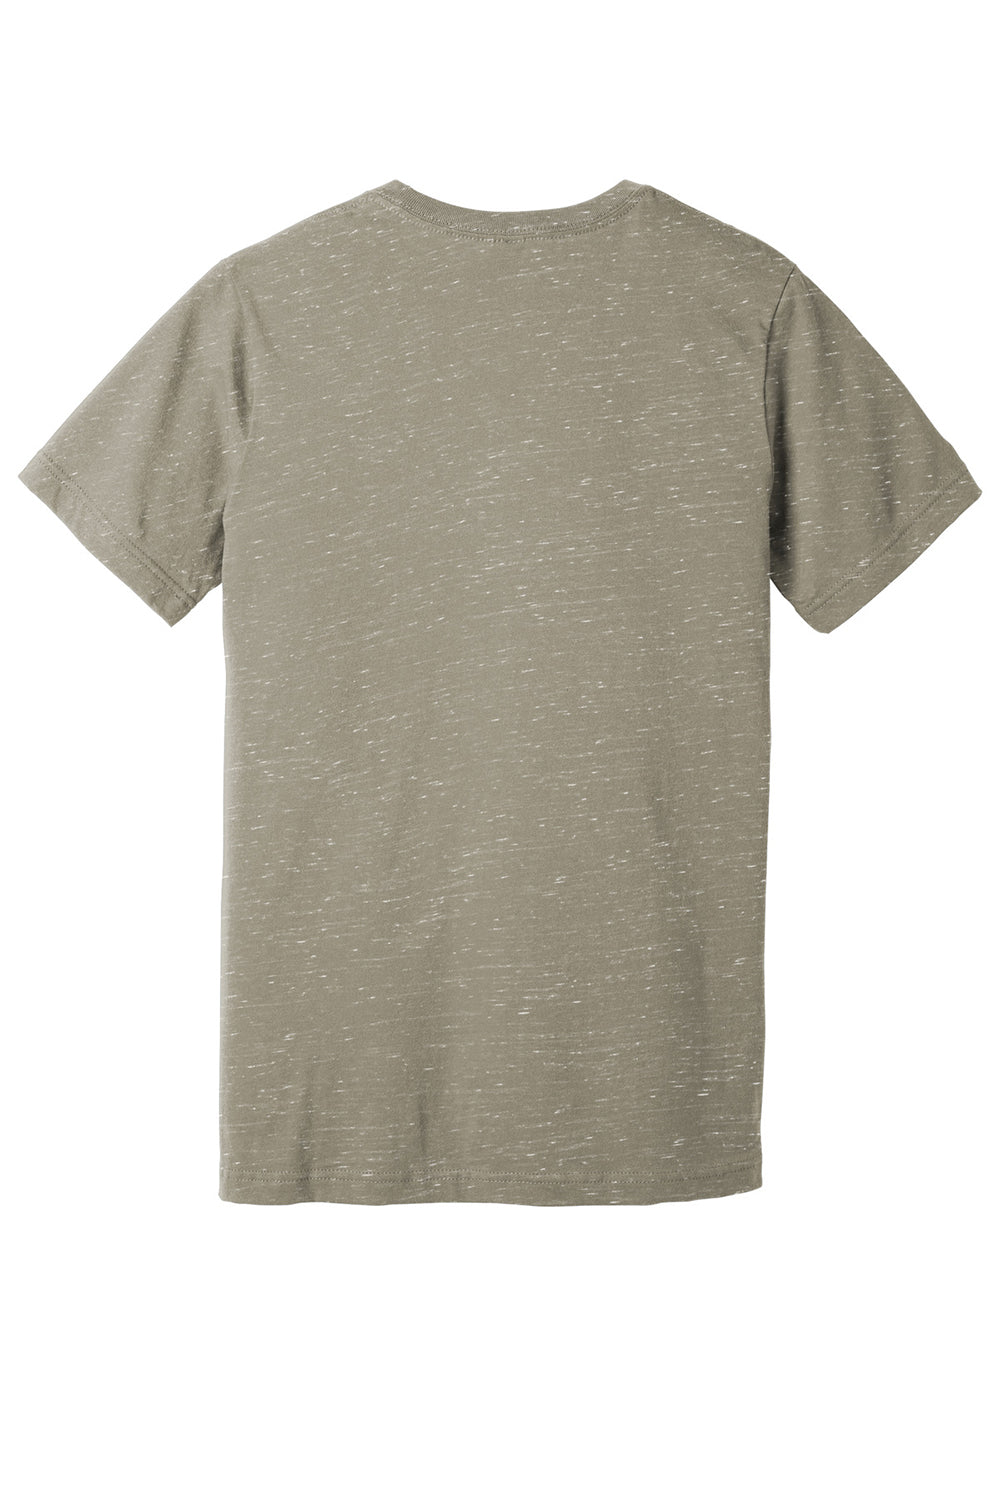 Bella + Canvas BC3655/3655C Mens Textured Jersey Short Sleeve V-Neck T-Shirt Stone Marble Flat Back